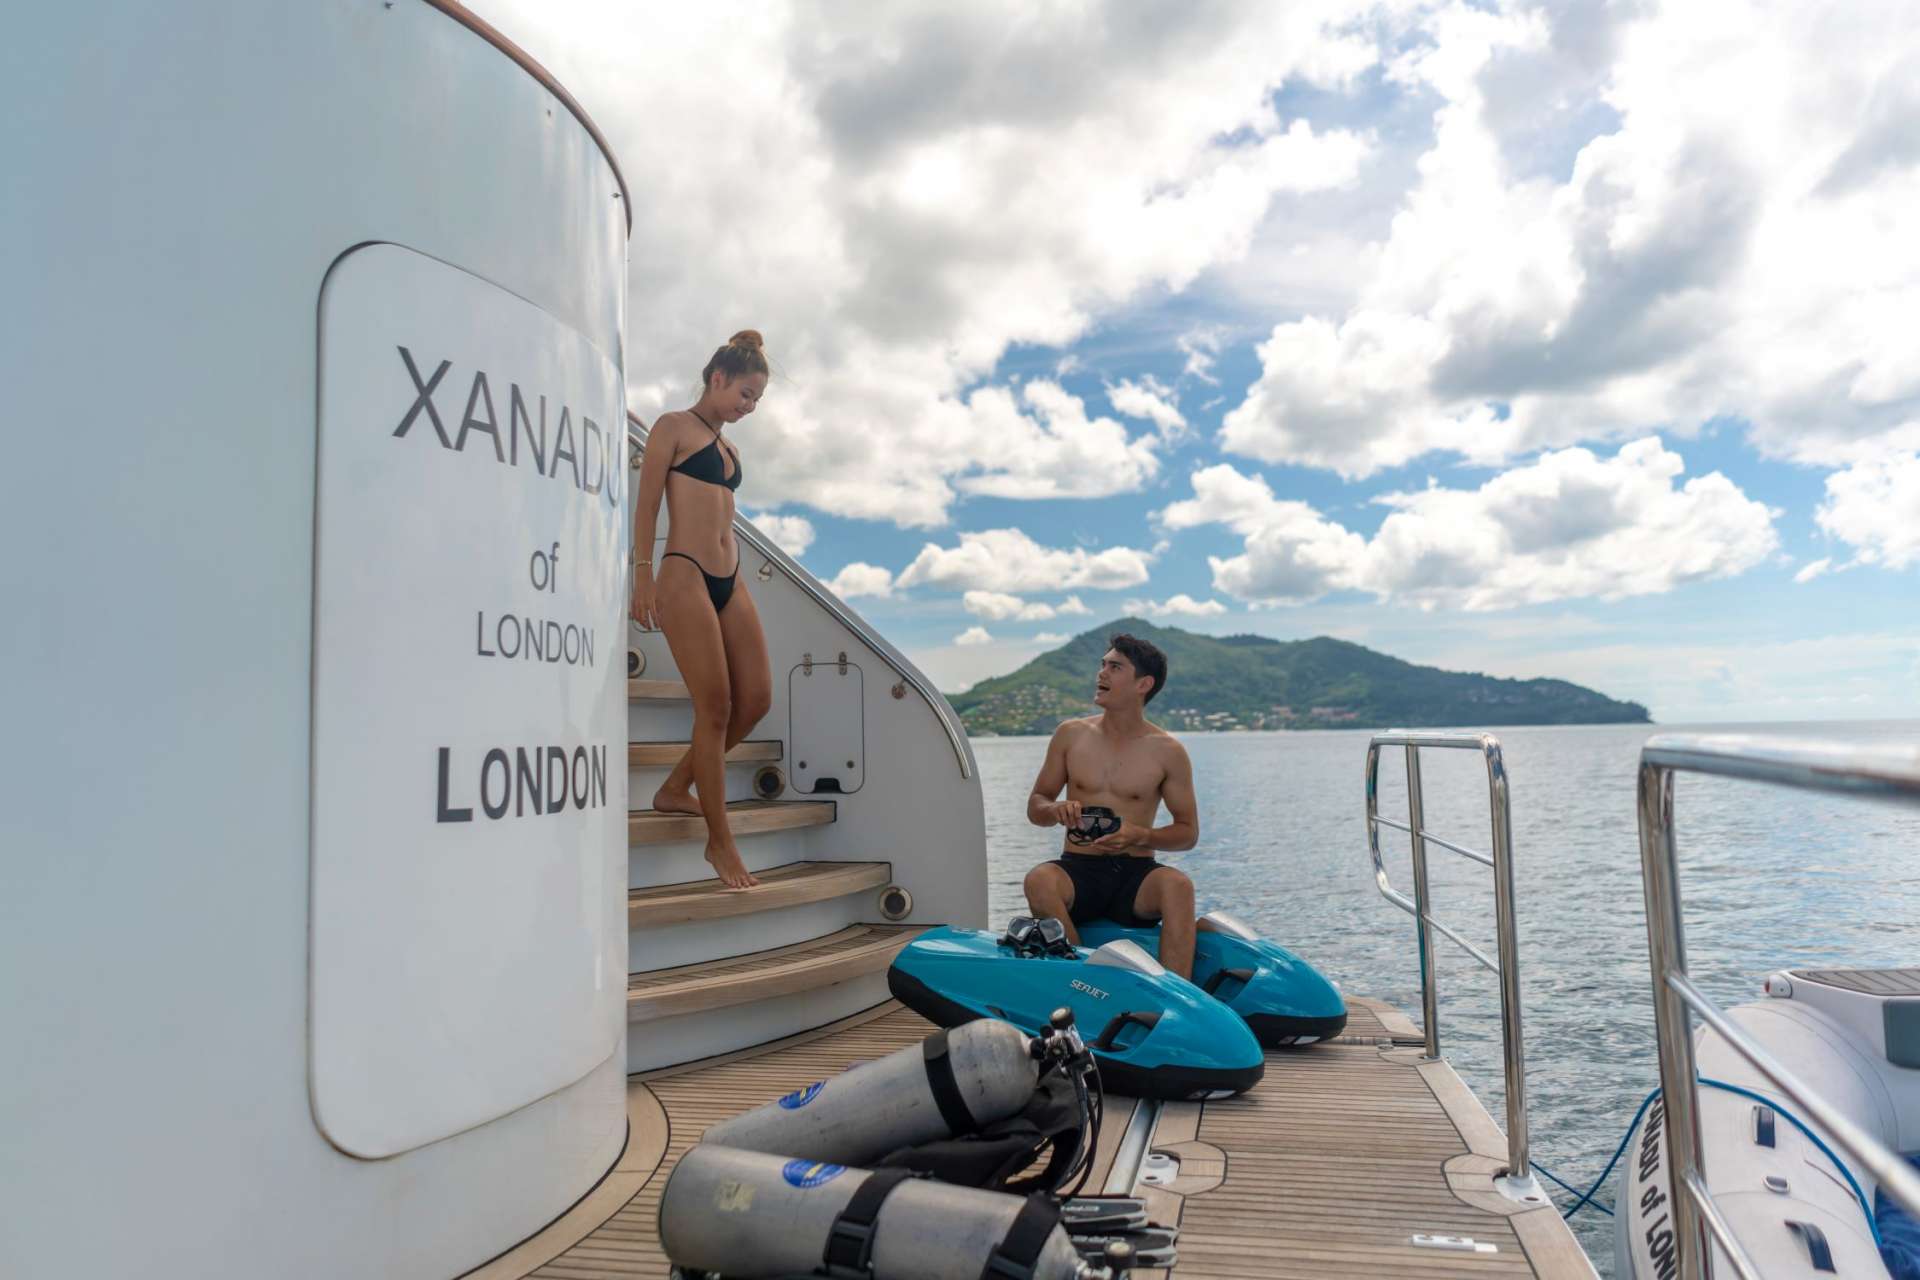 xanadu of london - Yacht Charter Koh Samui & Boat hire in SE Asia 5